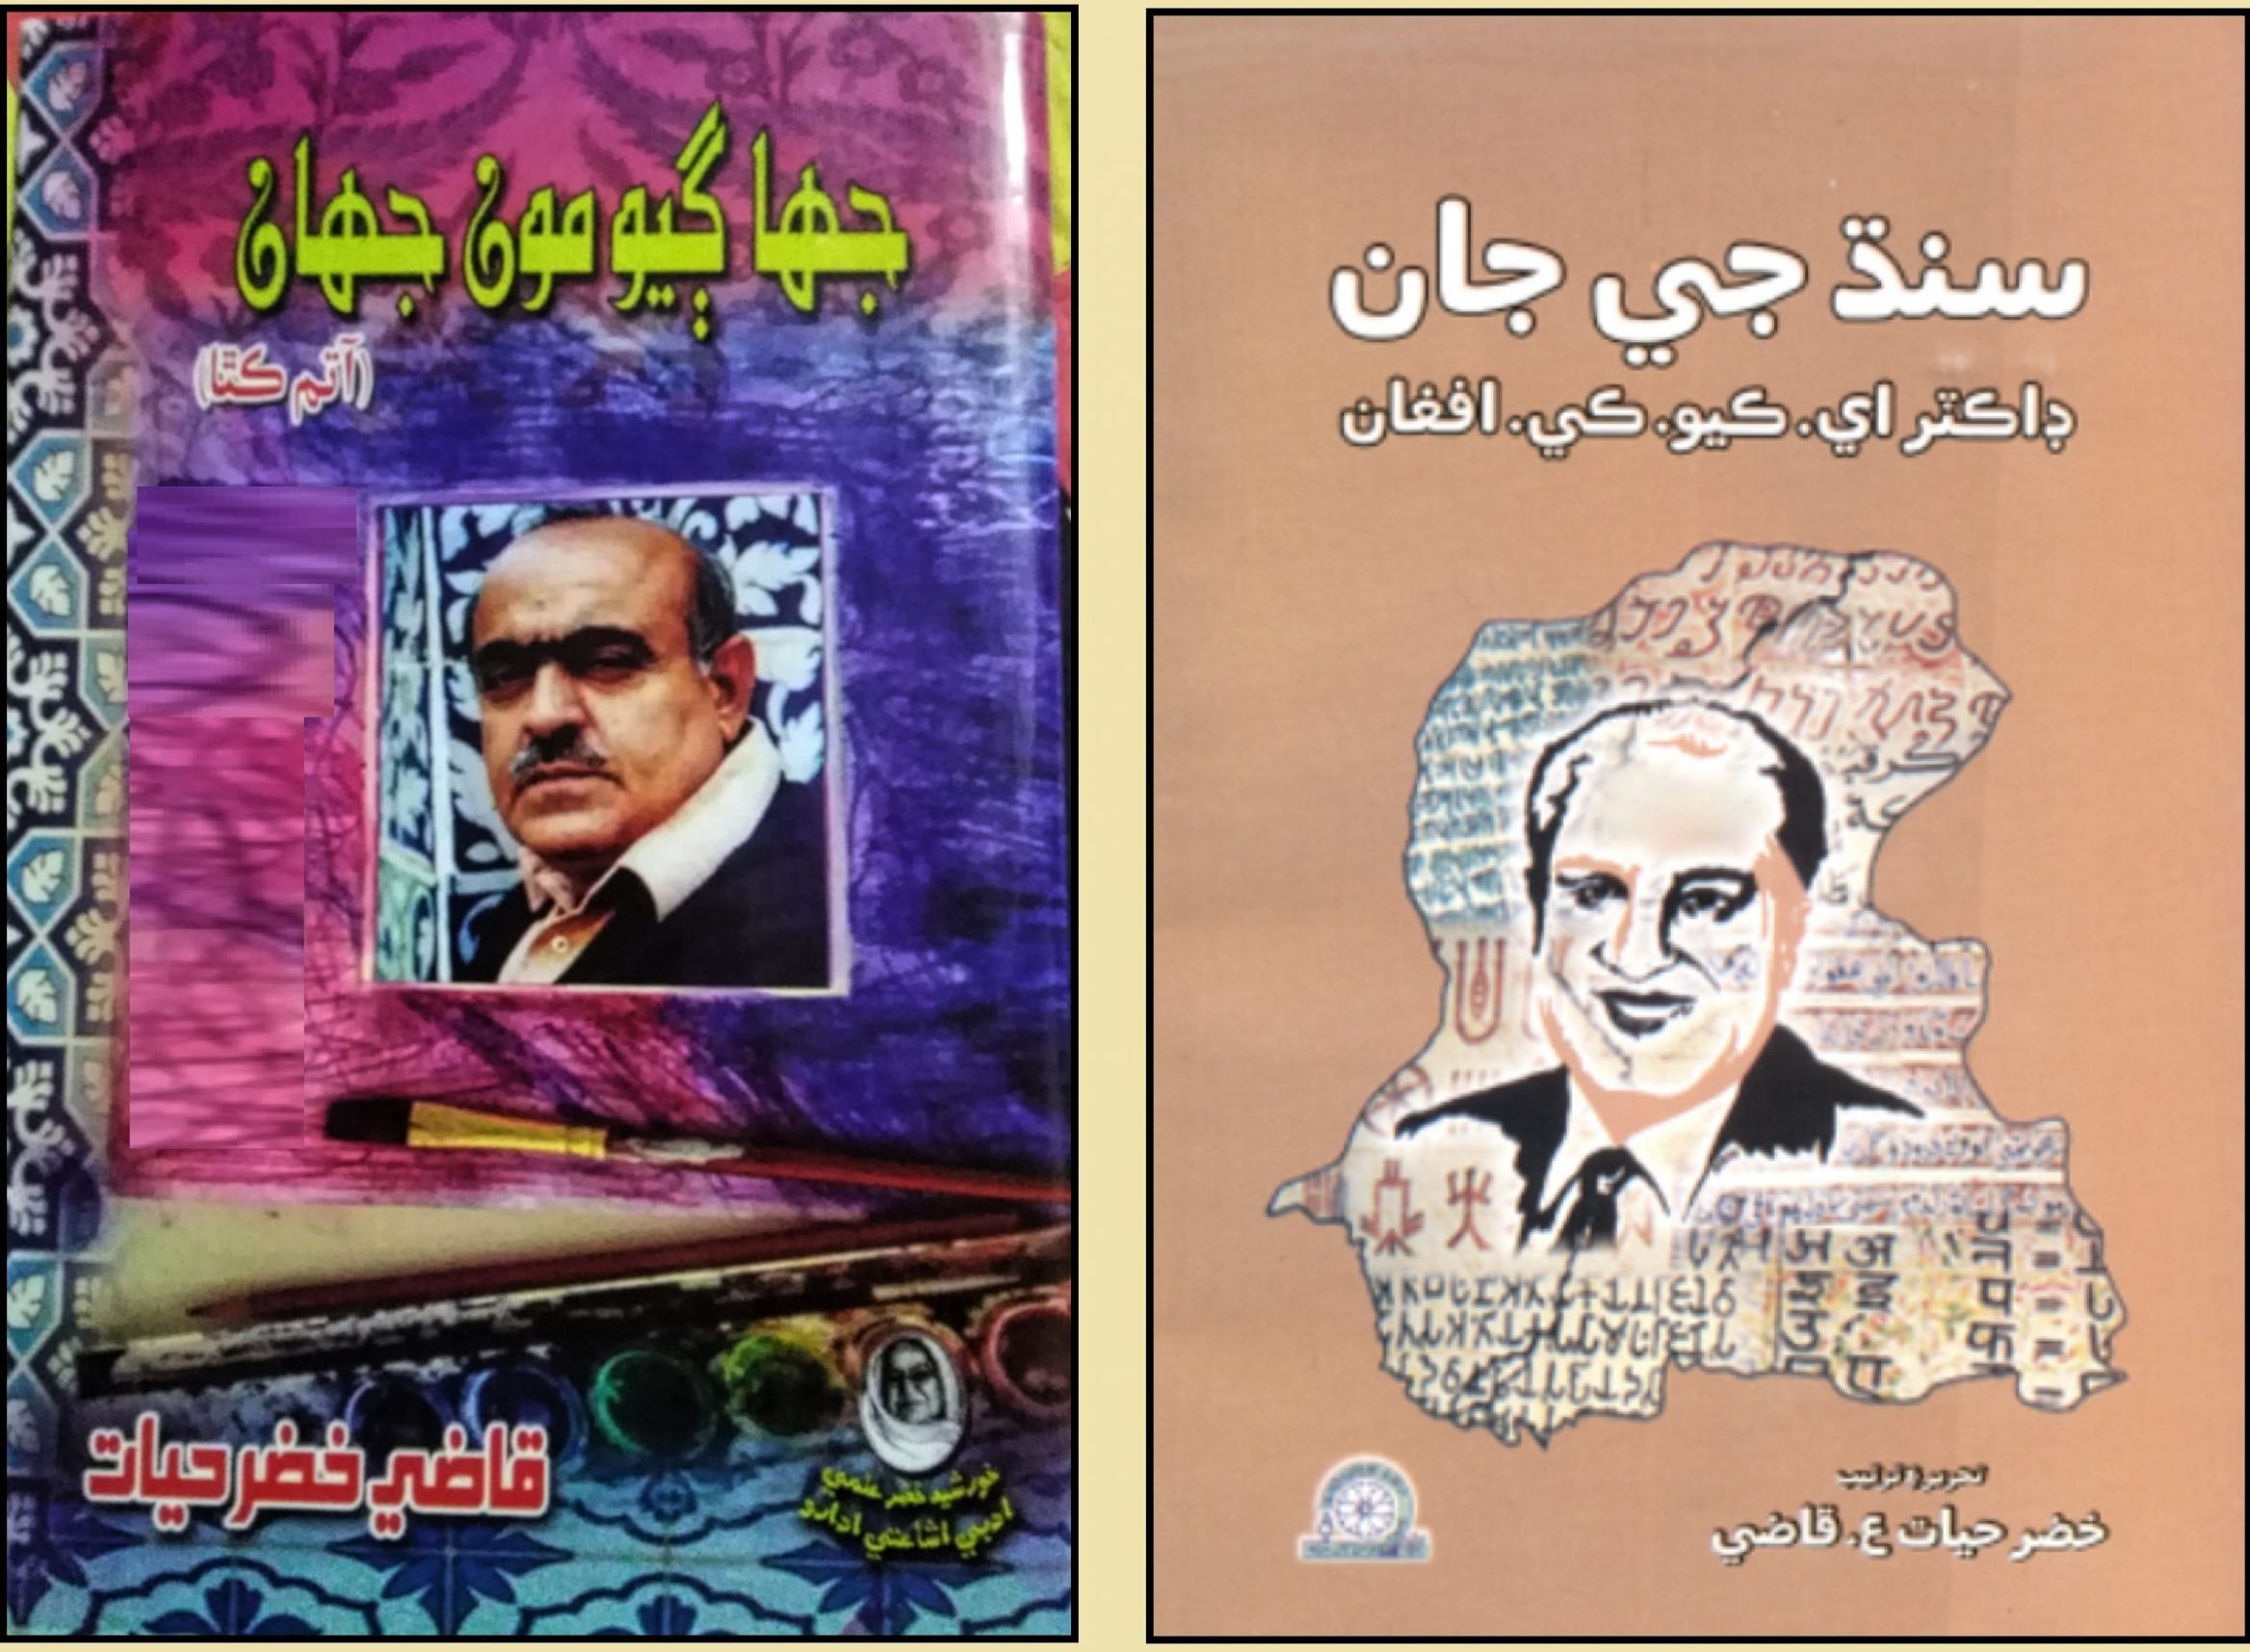 Picture 4. Books, authored by Qazi Khizar Hayat